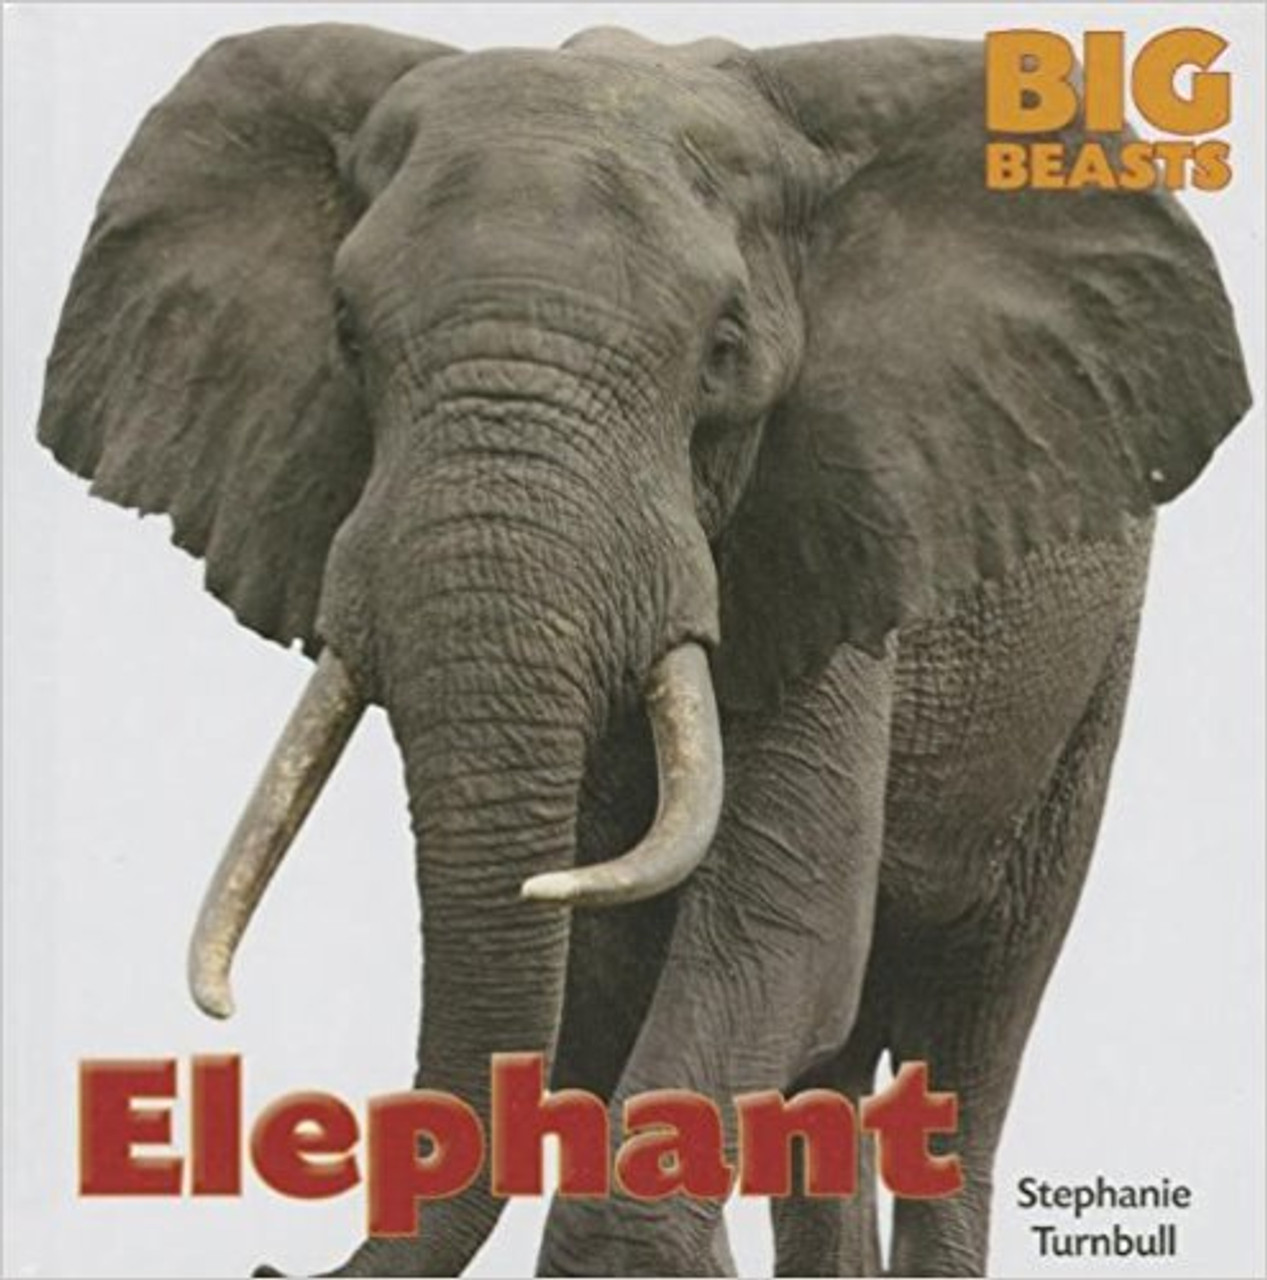 Elephant - Big Beasts by Stephanie Turnbull